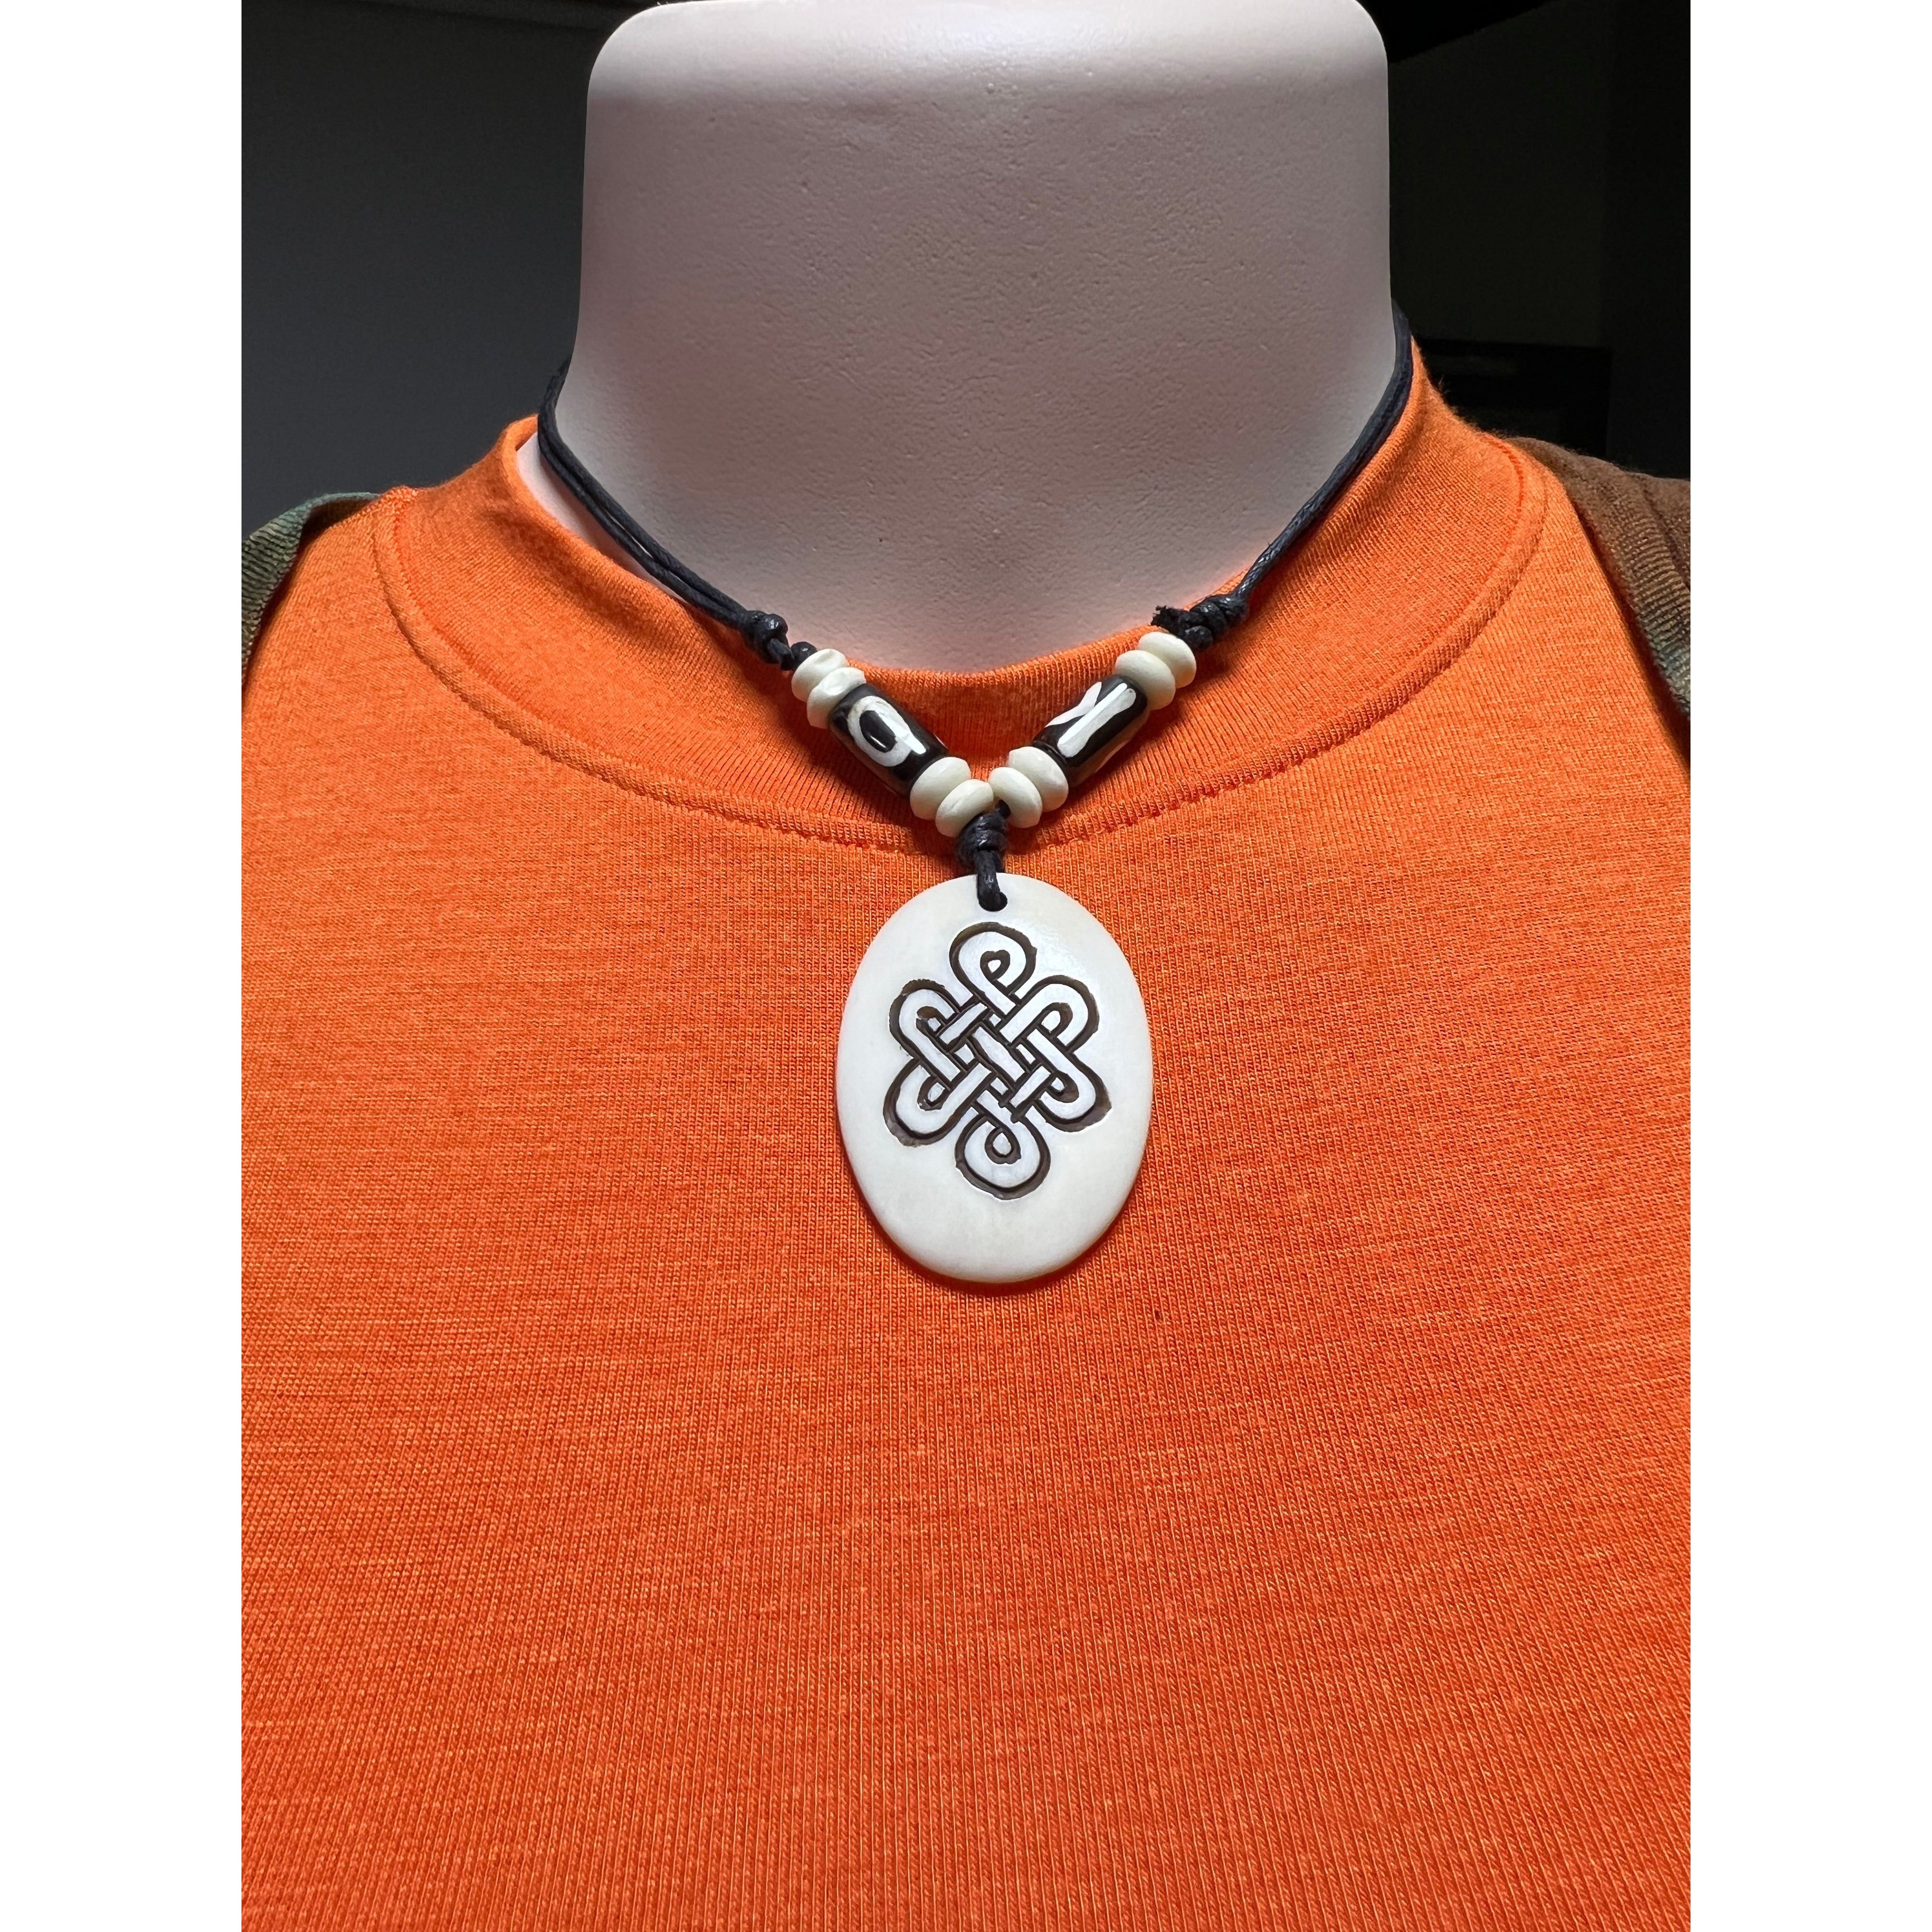 Dordje  Design Necklaces.